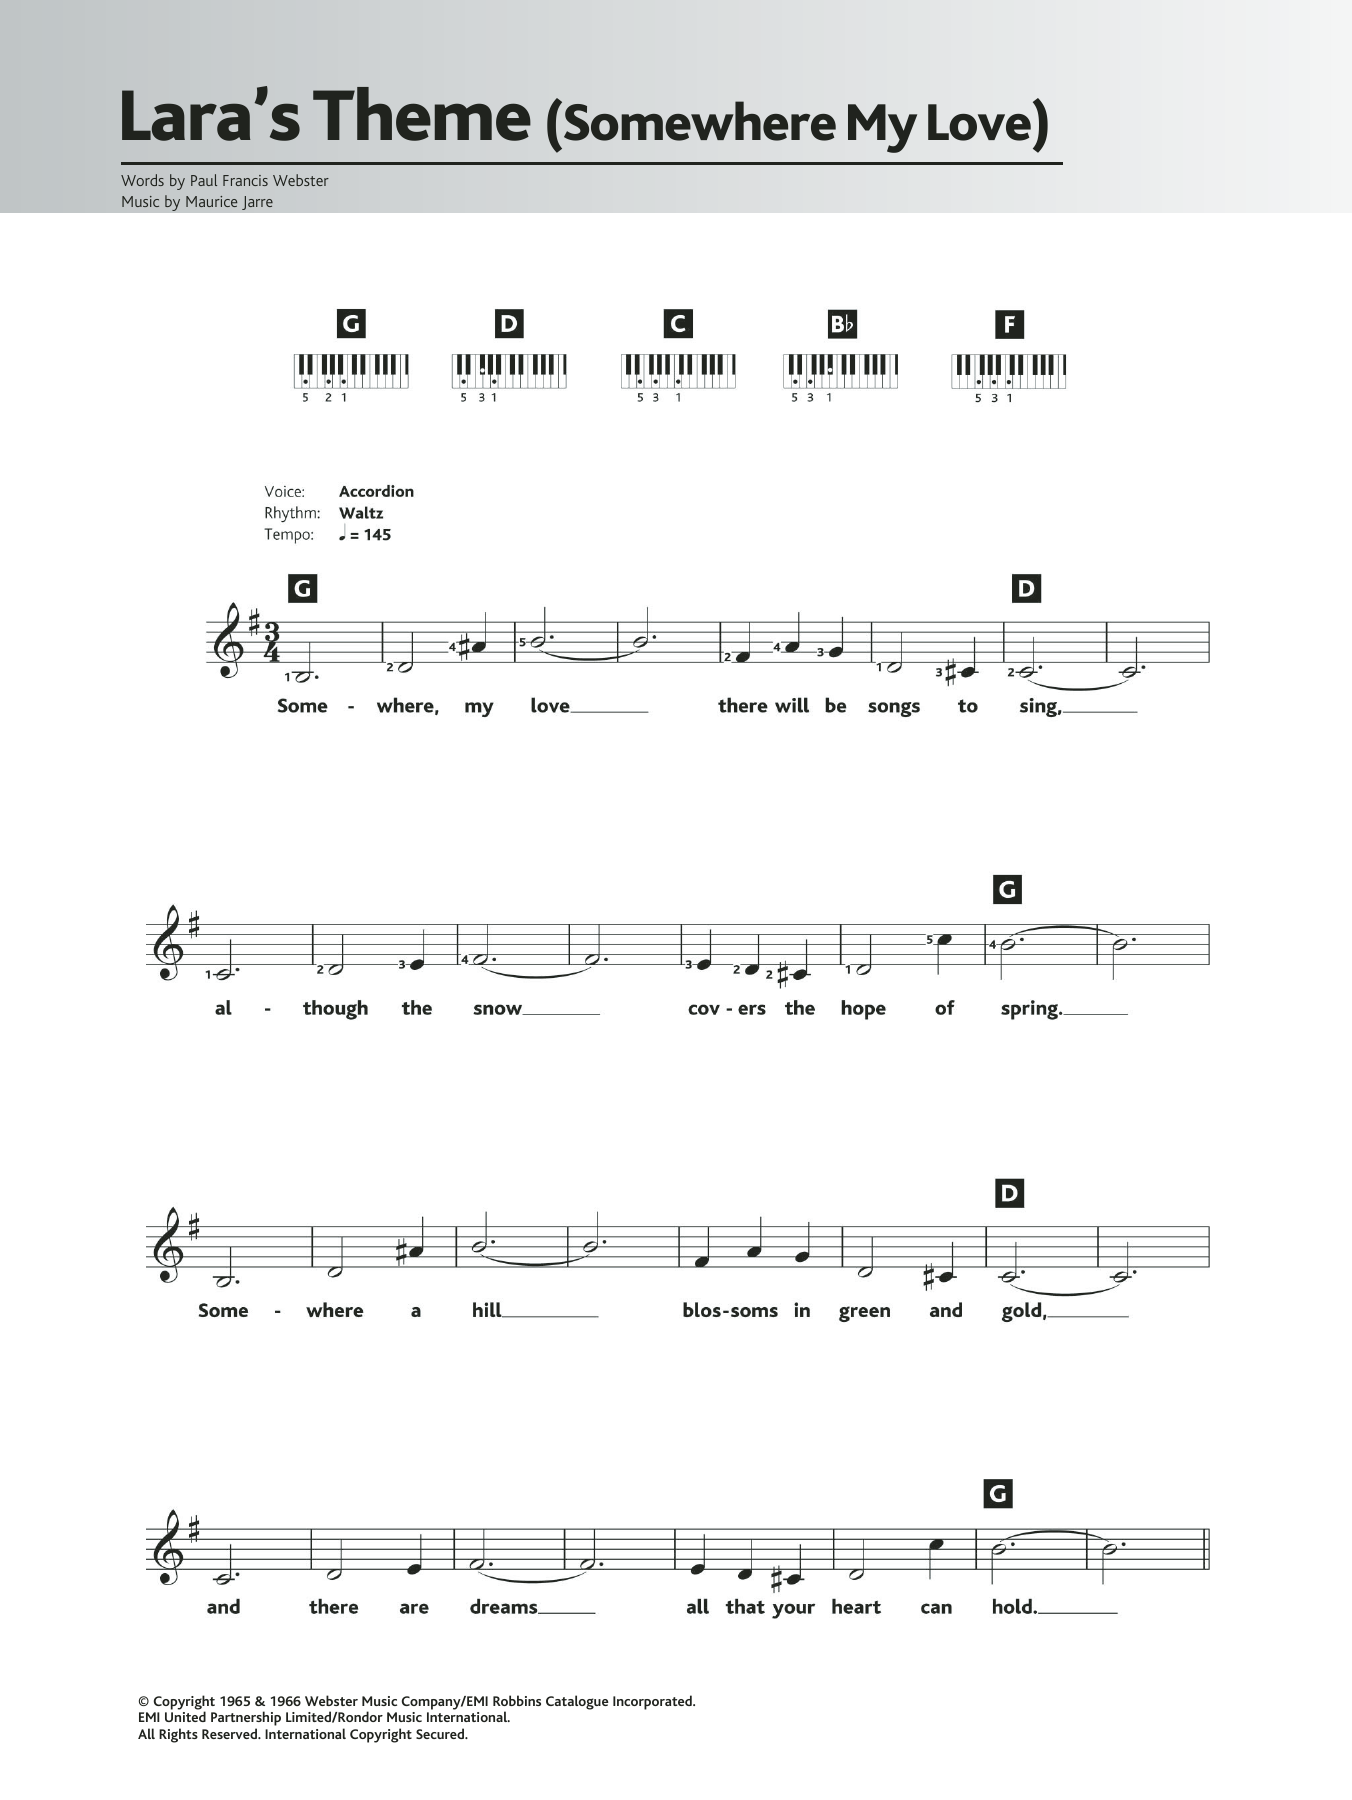 Maurice Jarre Somewhere My Love (Lara's Theme) Sheet Music Notes & Chords for Keyboard - Download or Print PDF